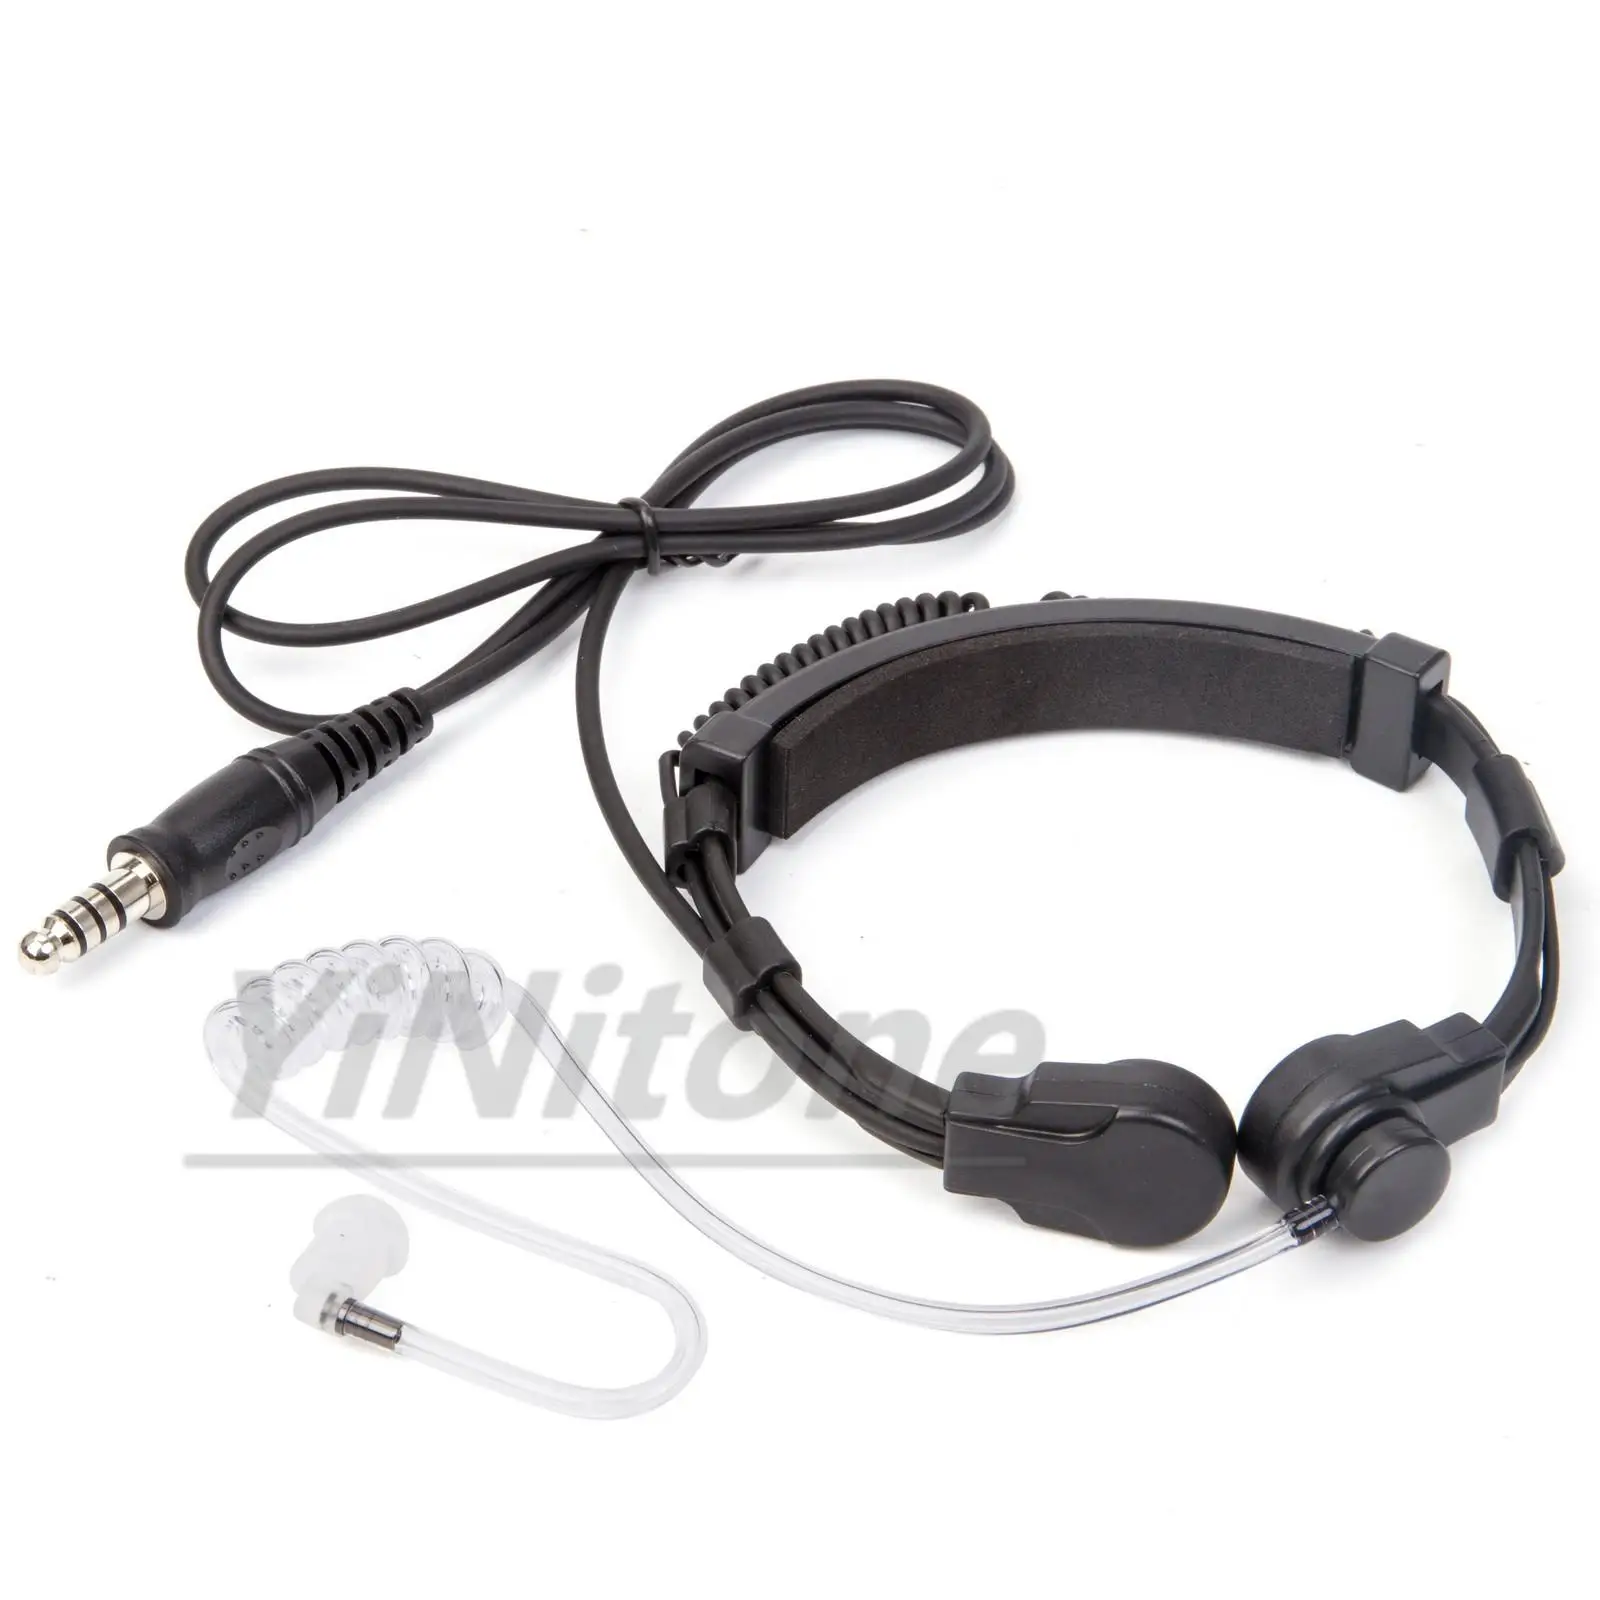 

7.1mm tactical telescopic laryngeal headset Heavy Duty Throat Vibration Mic Headphone NATO Plug for Radio Walkie-talkie headset